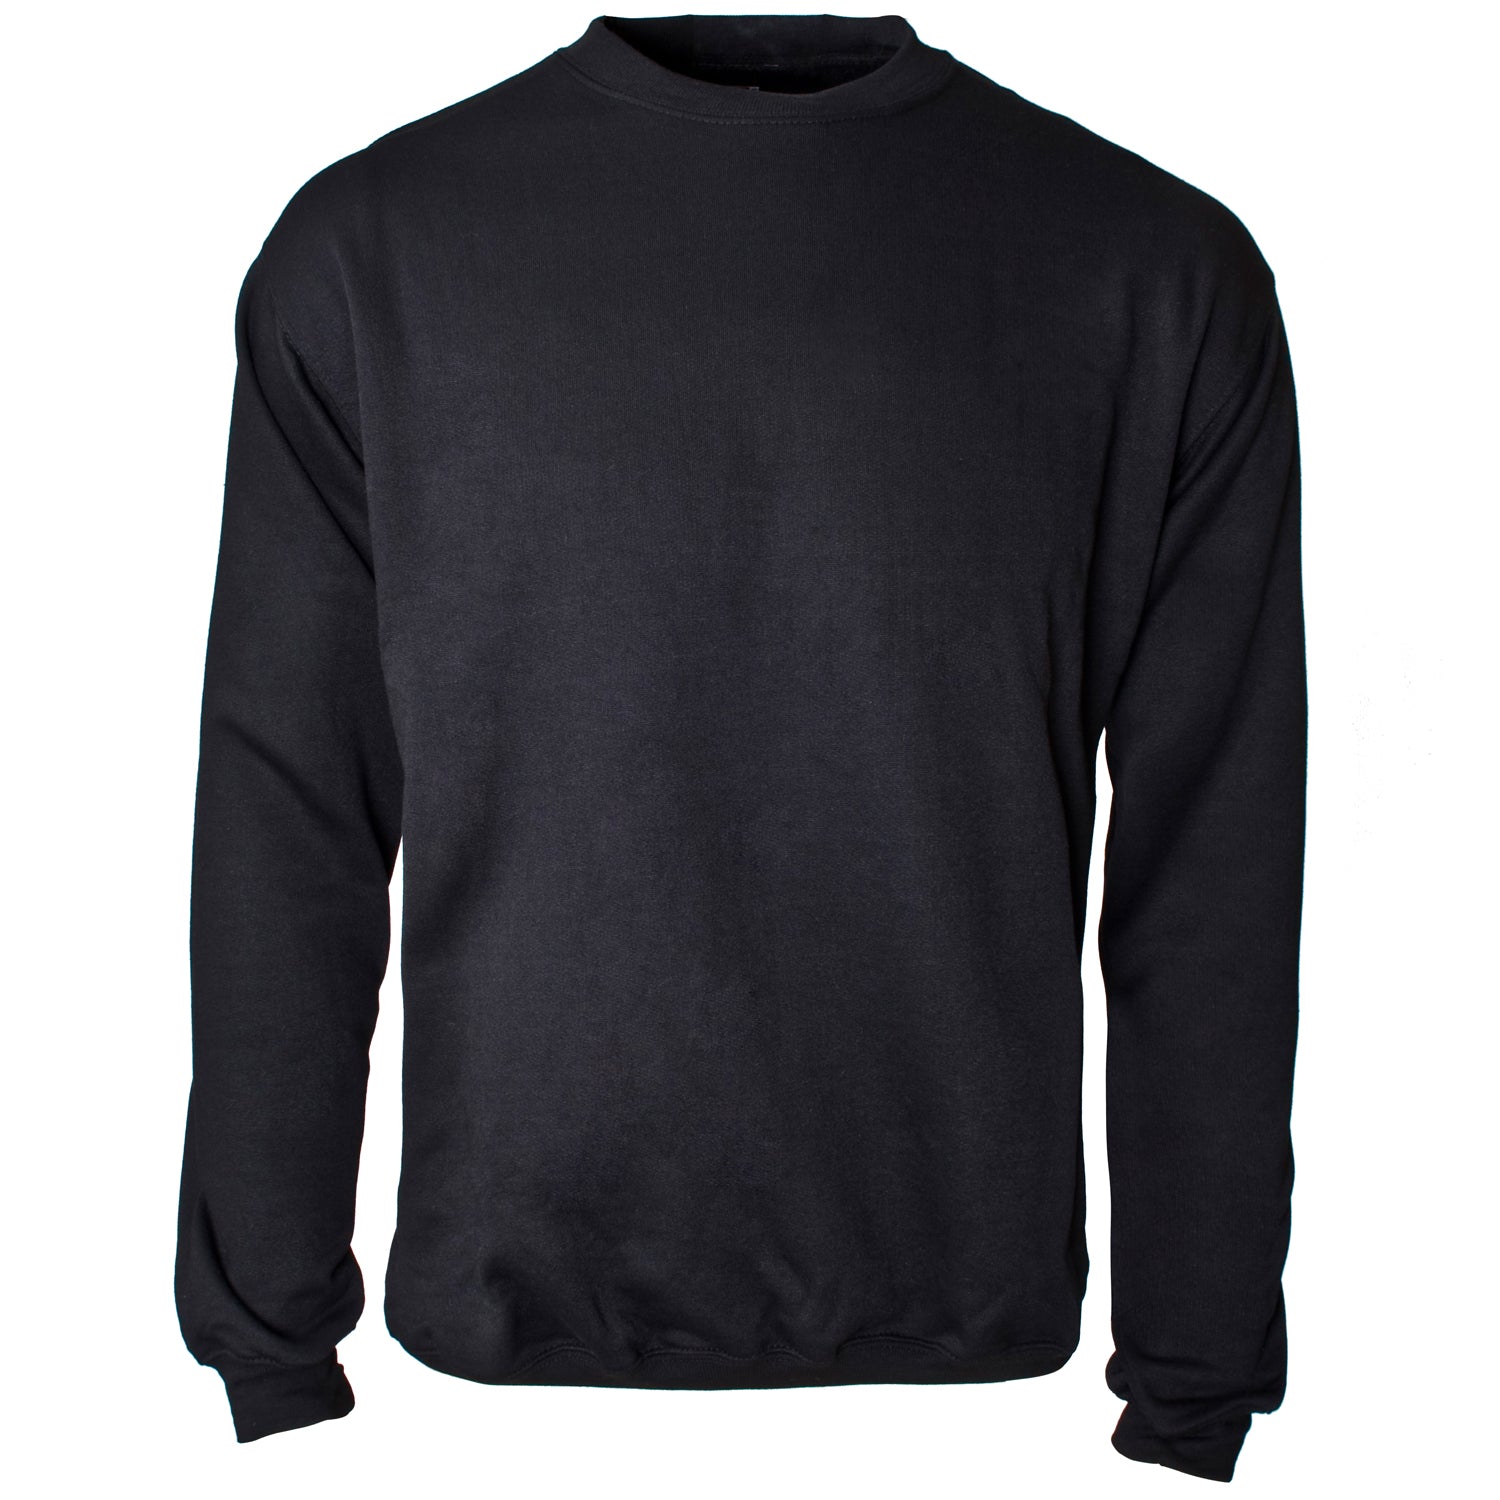 Supertouch Sweatshirt - Black